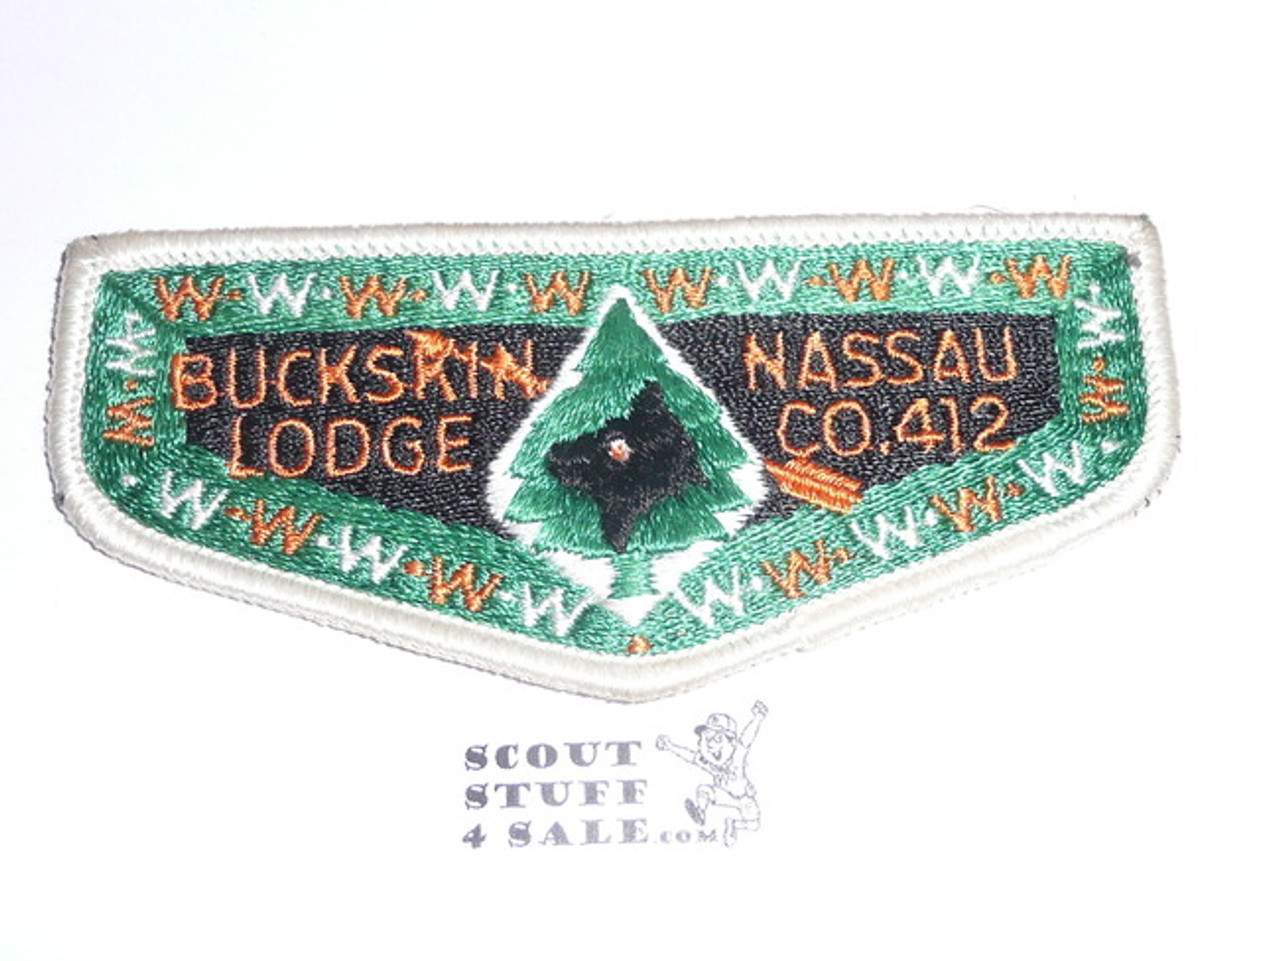 Order of the Arrow Lodge #412 Buckskin s2 Flap Patch